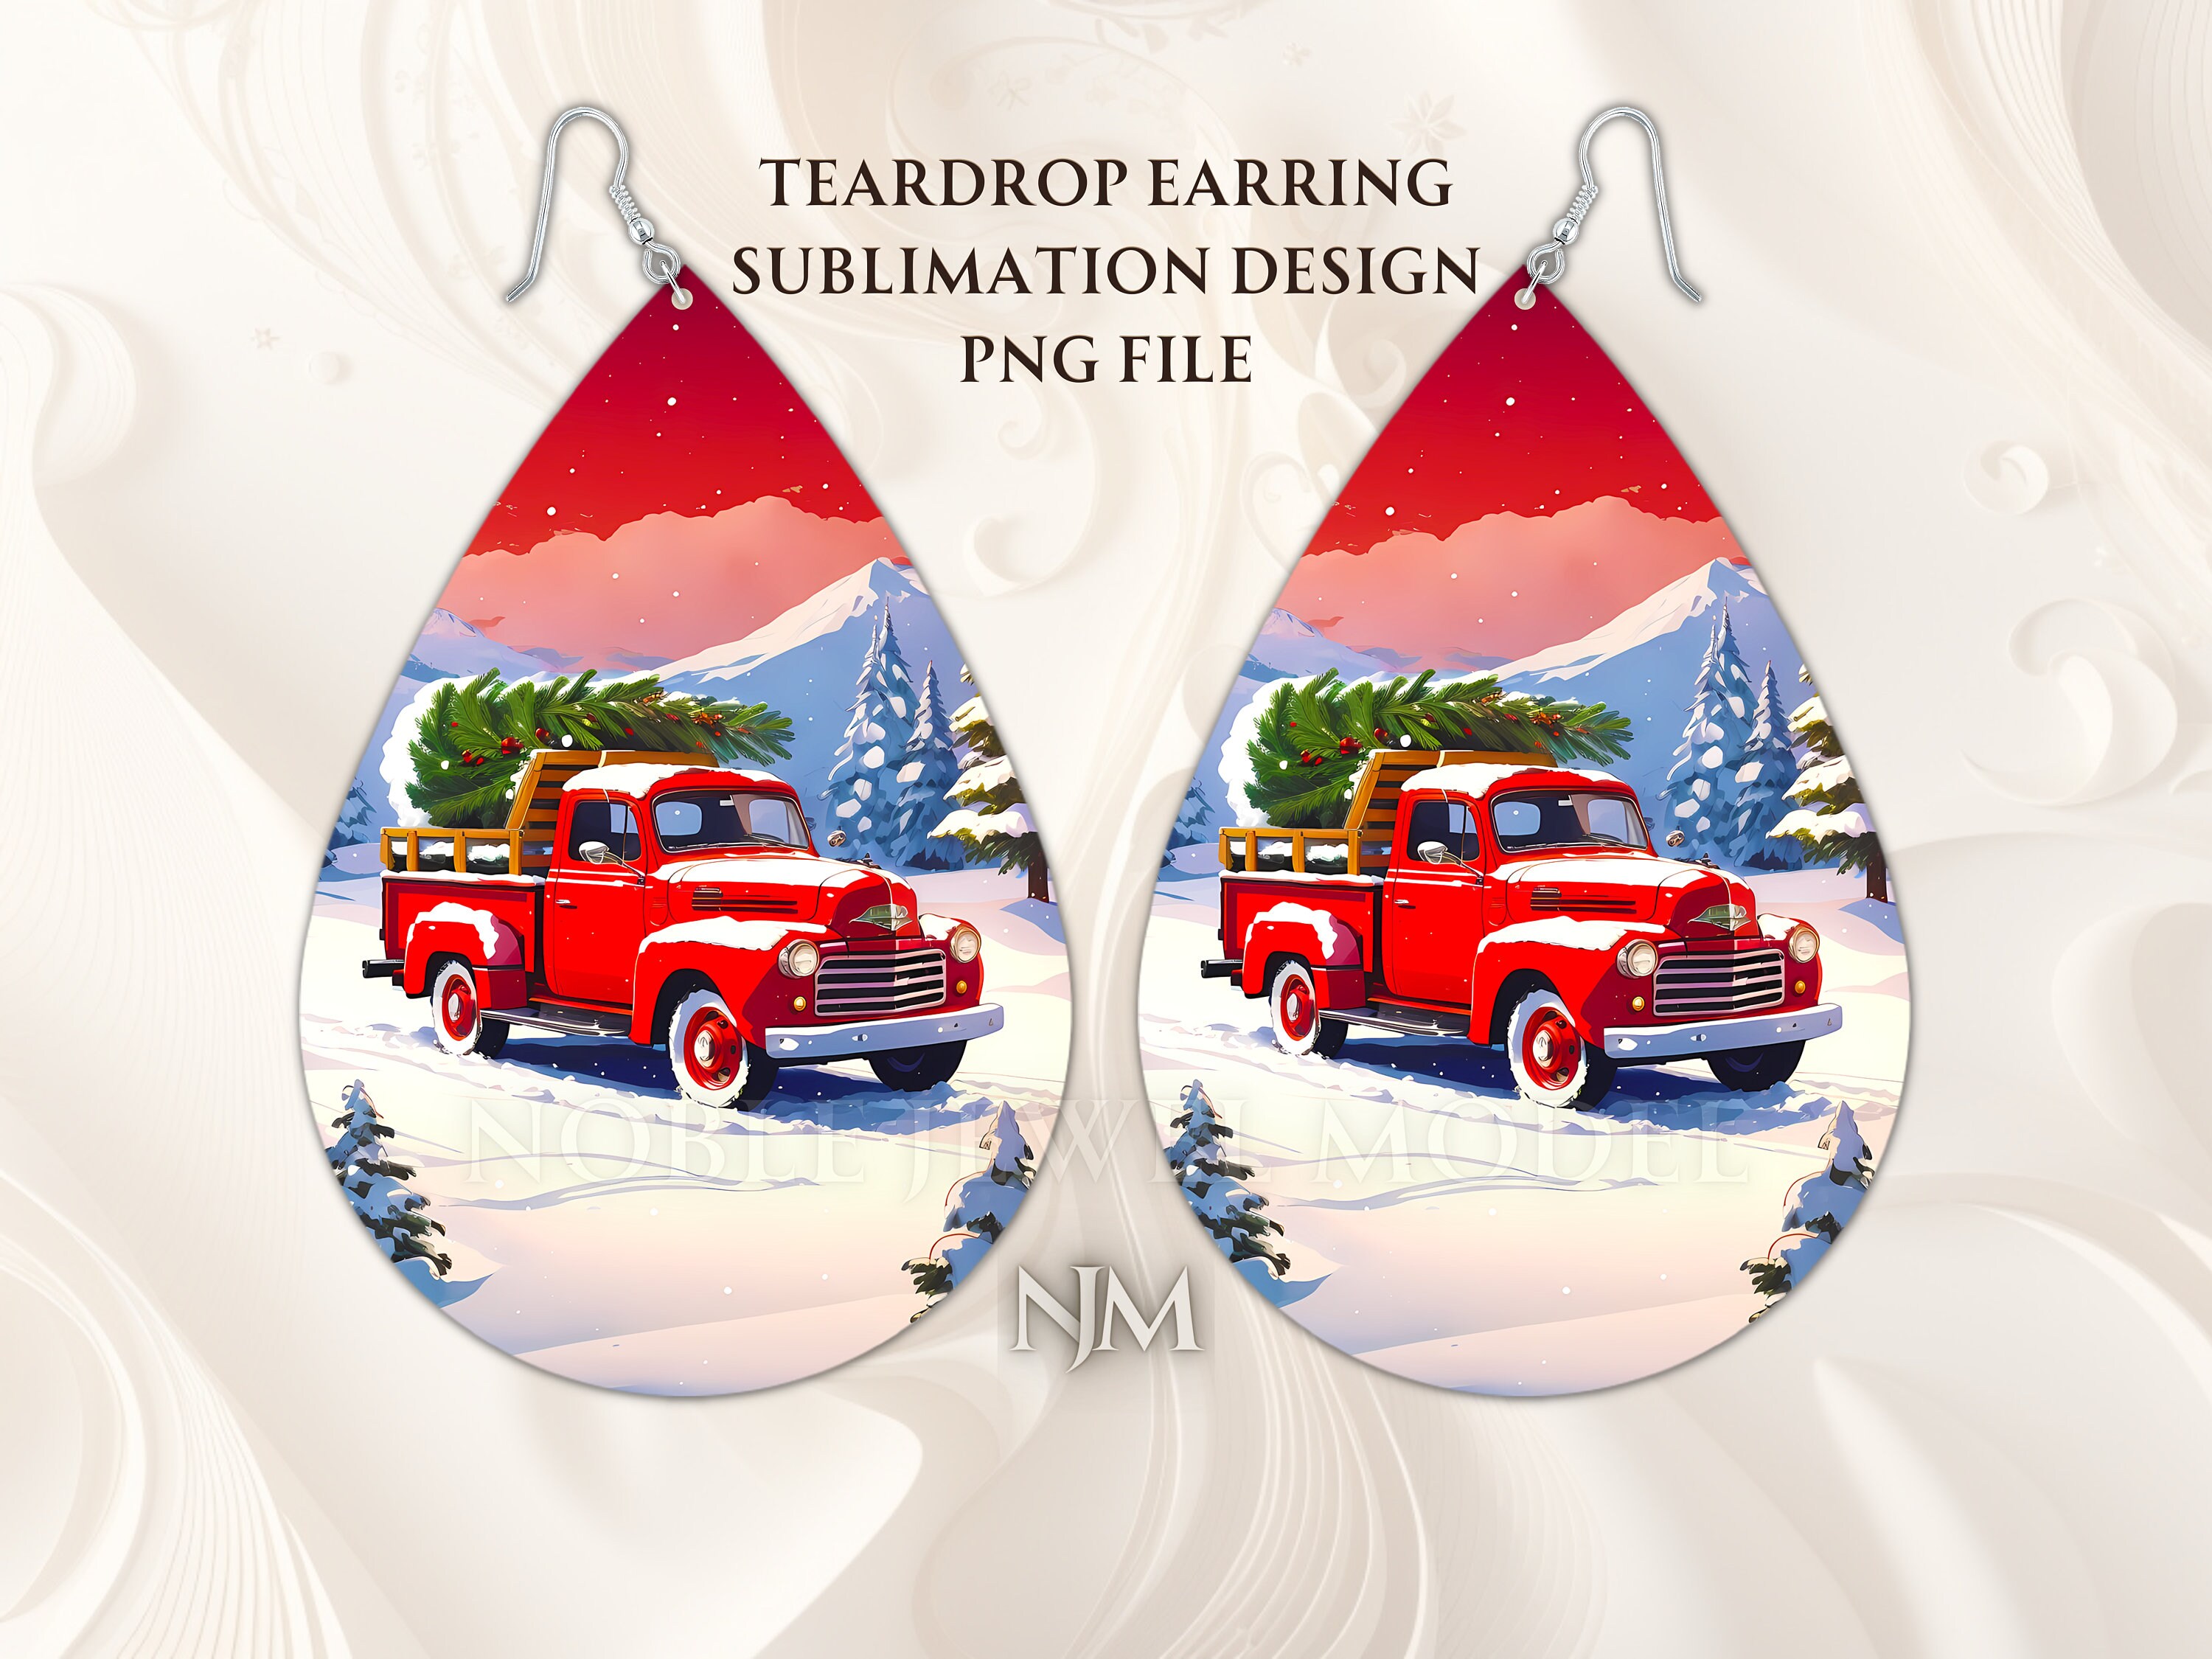 Instant Print) Digital Download - 4pc Tear drop red truck earring